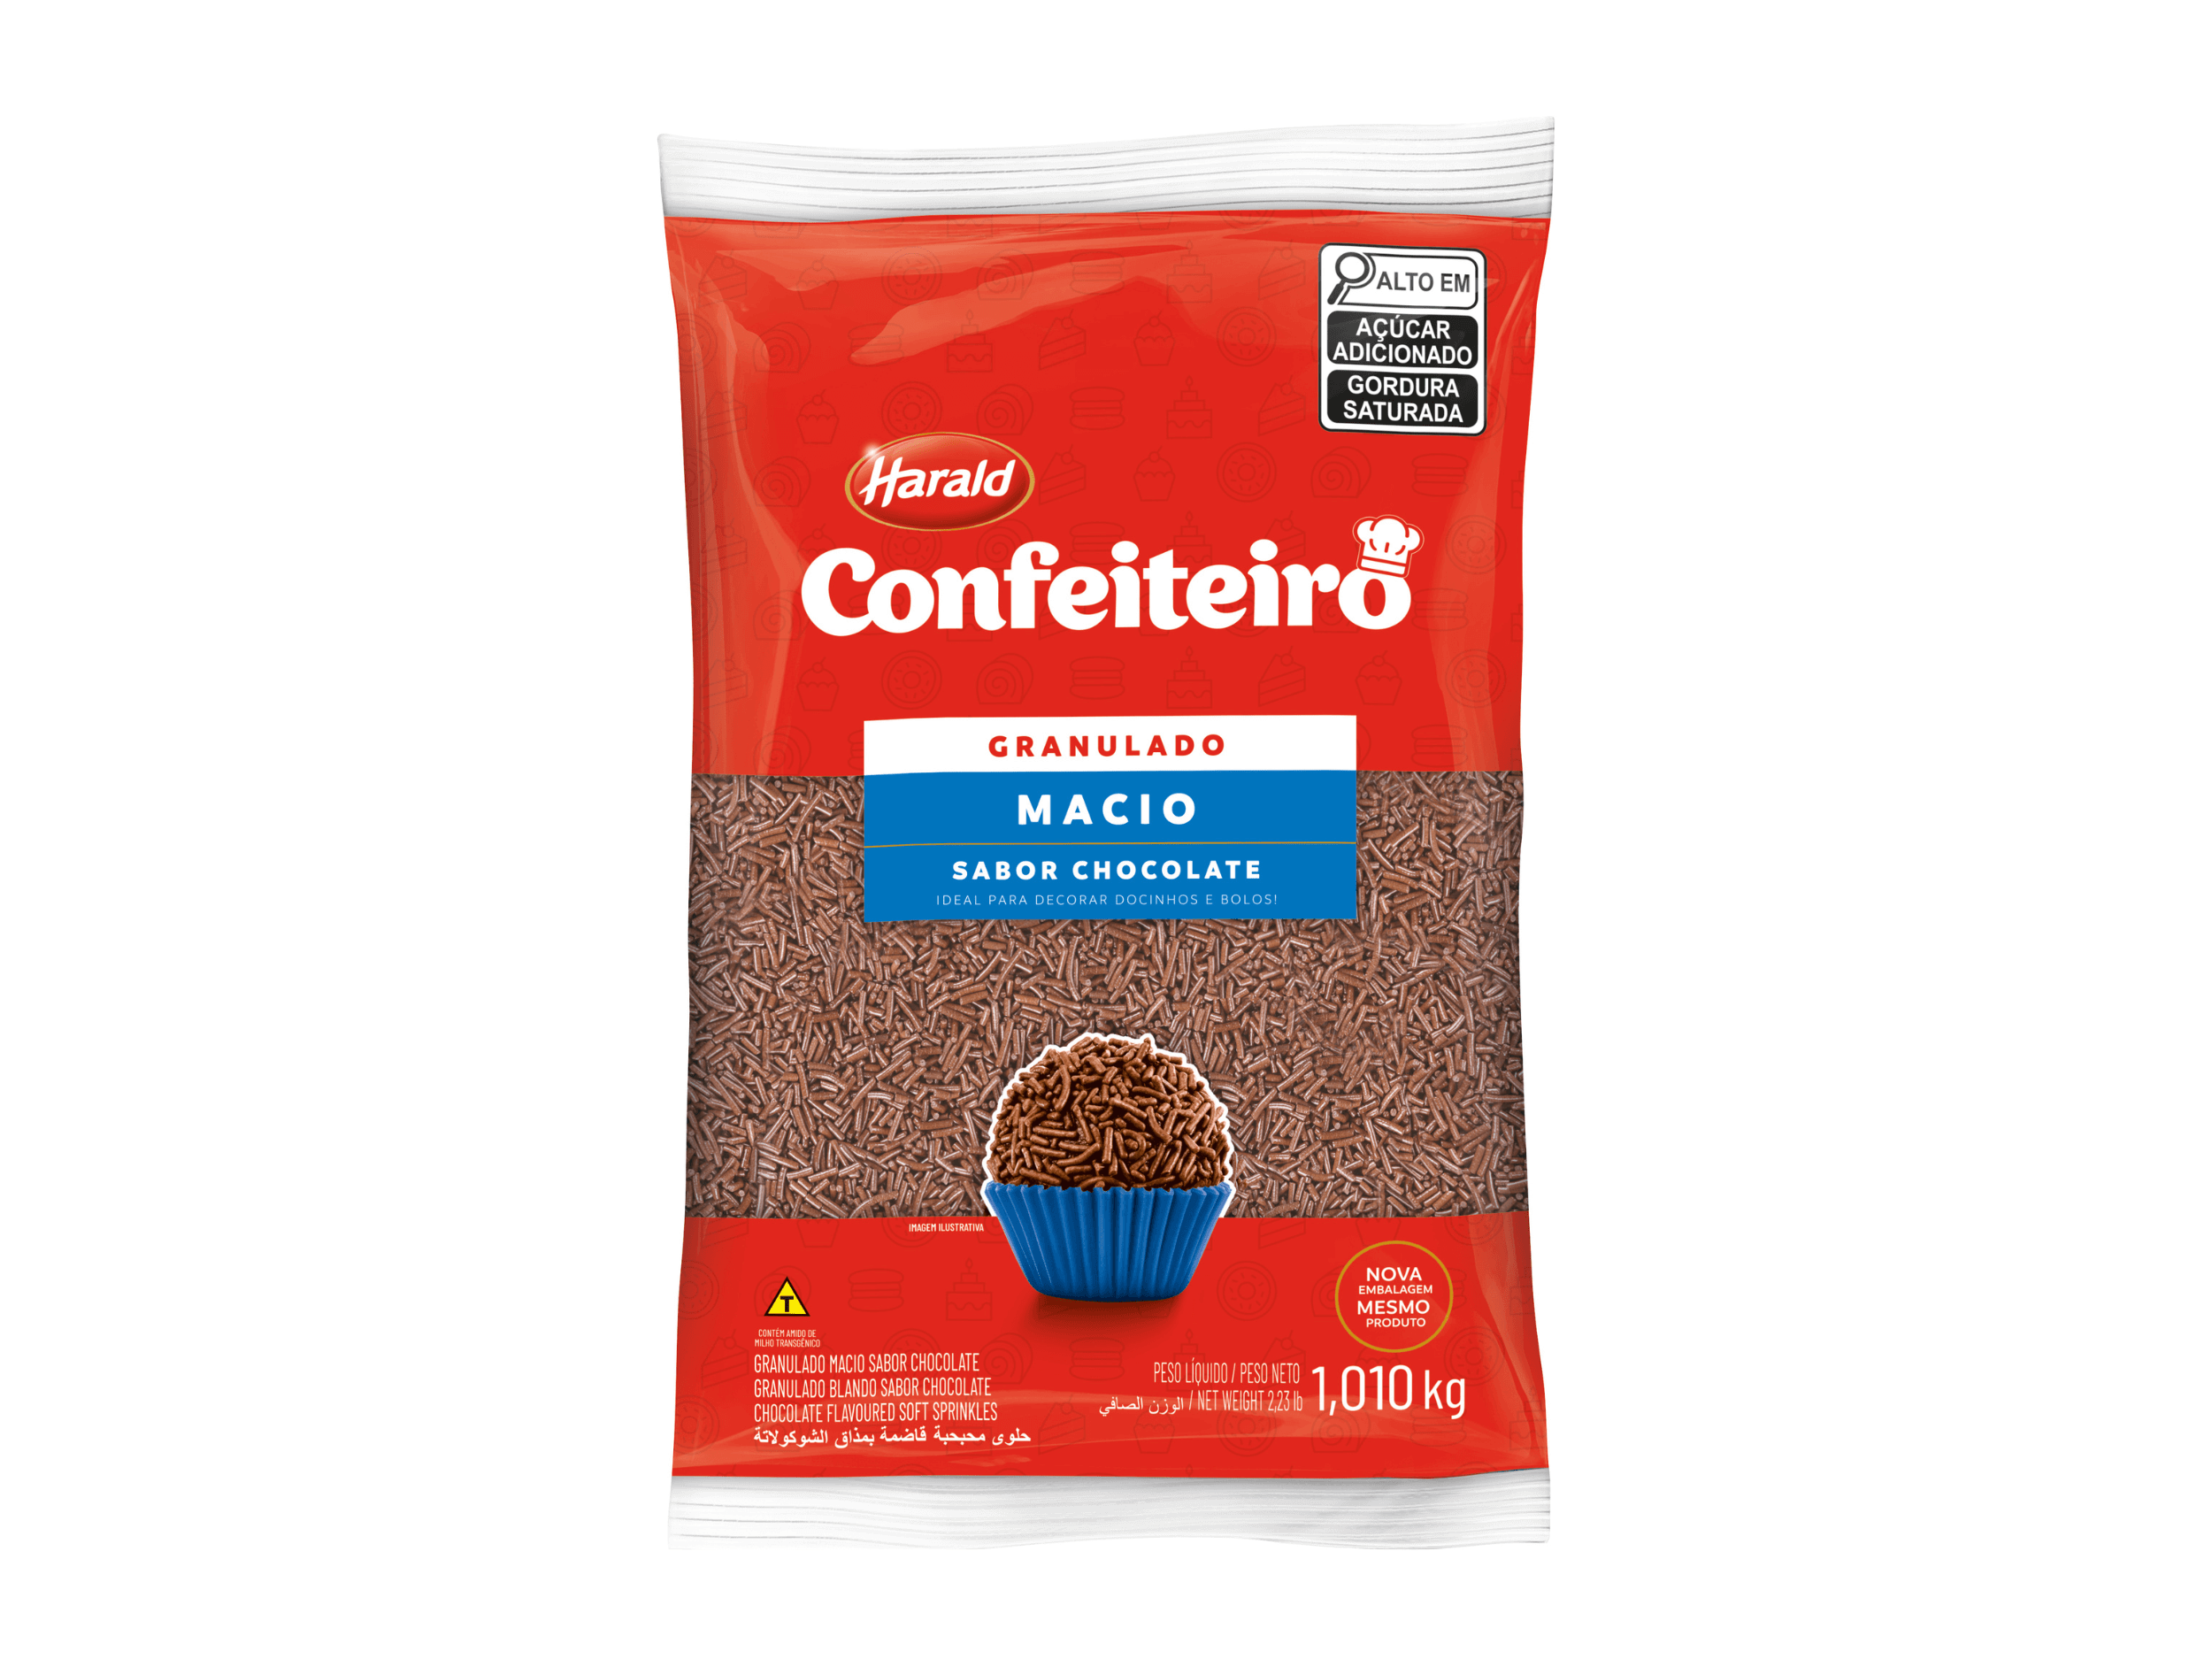 Granulado Harald Confeiteiro Macio Chocolate 1,010kg